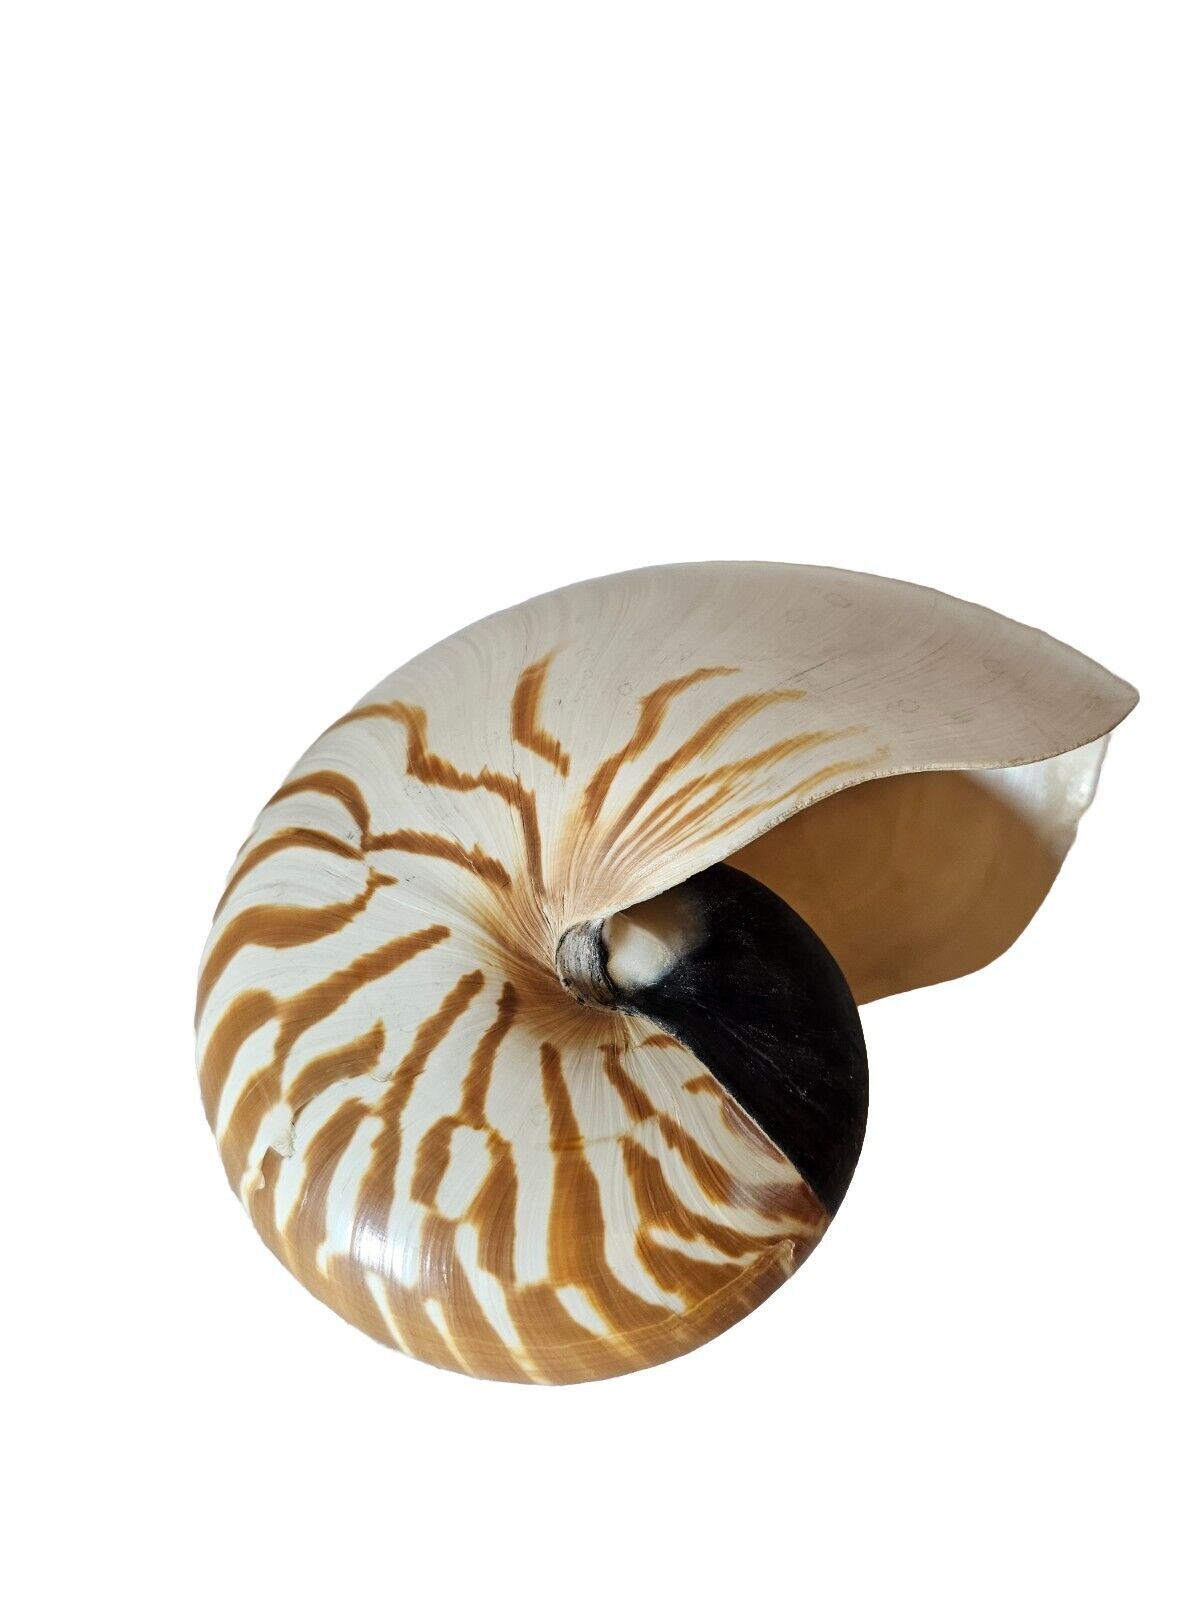 Chambered Nautilus Seashell, Tiger Striped, 6\